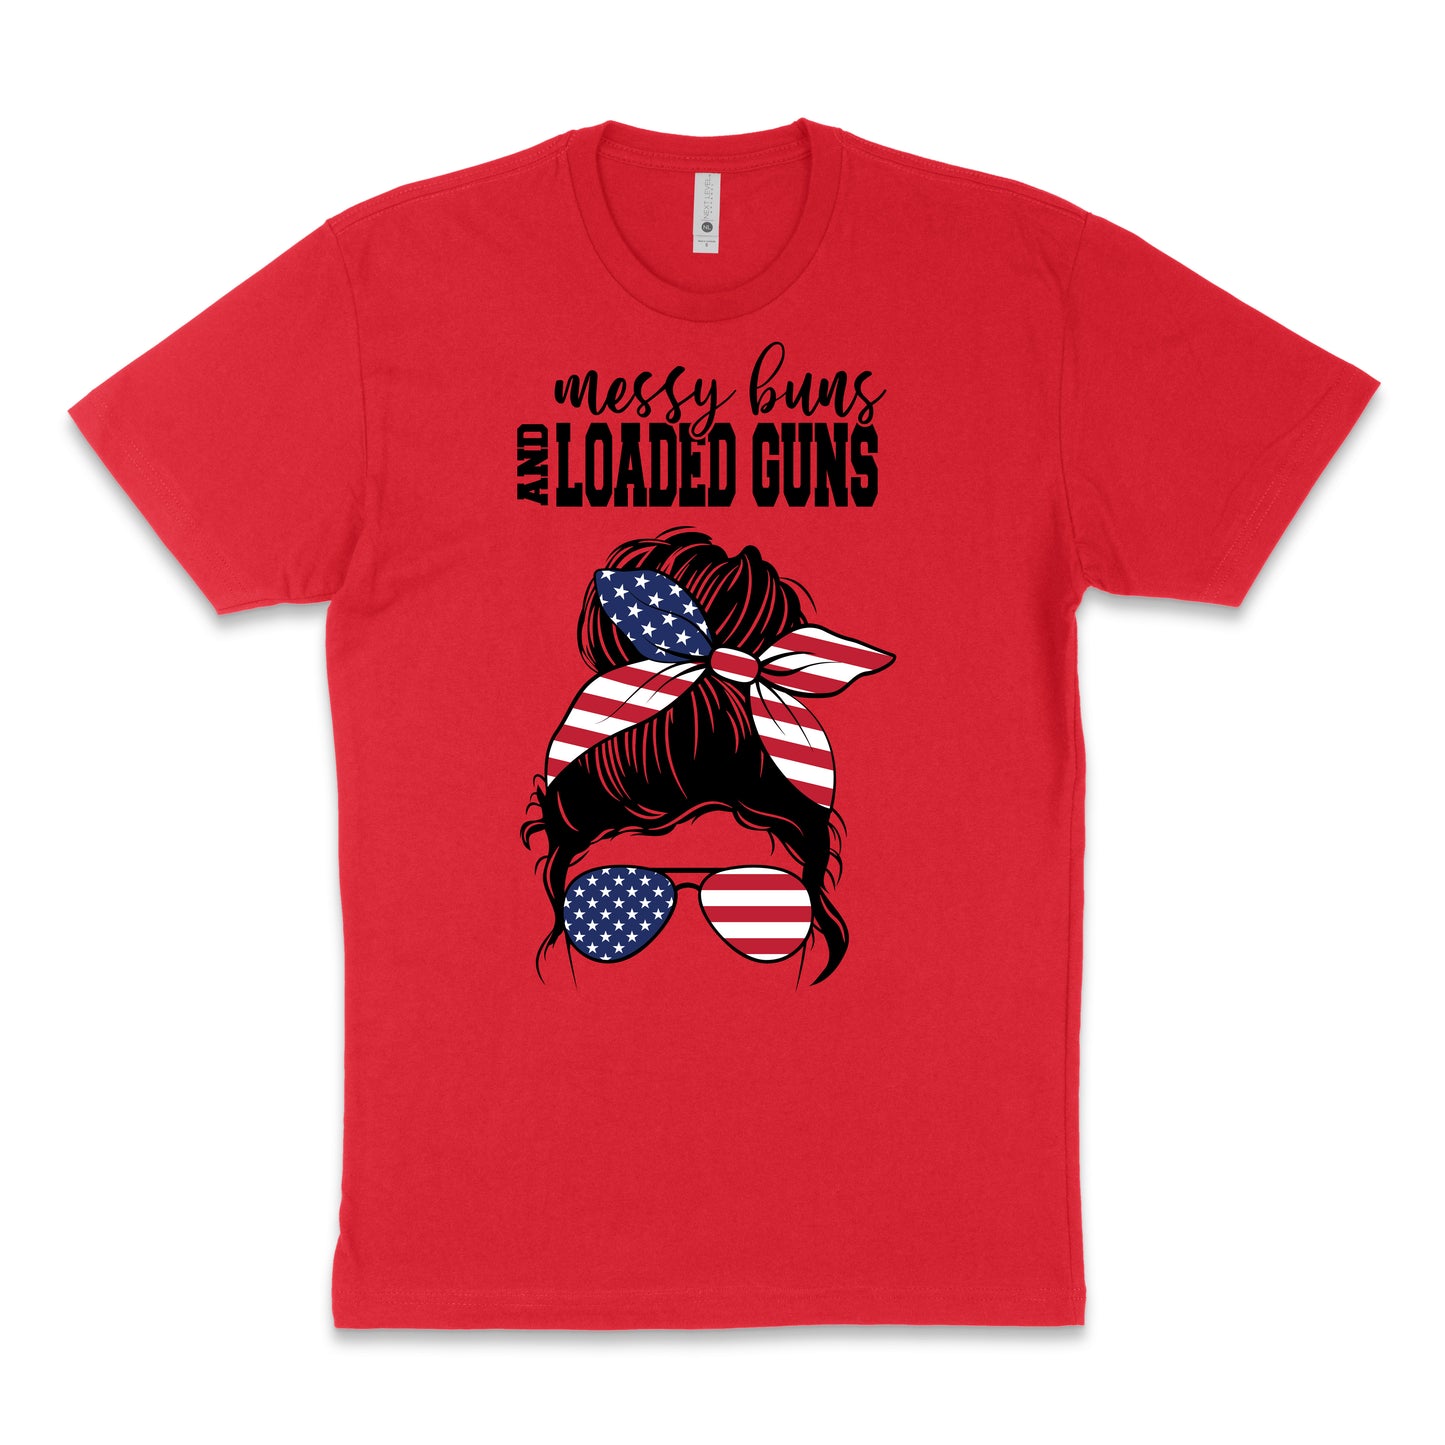 Messy Buns & Loaded Guns, Short Sleeve T-Shirt